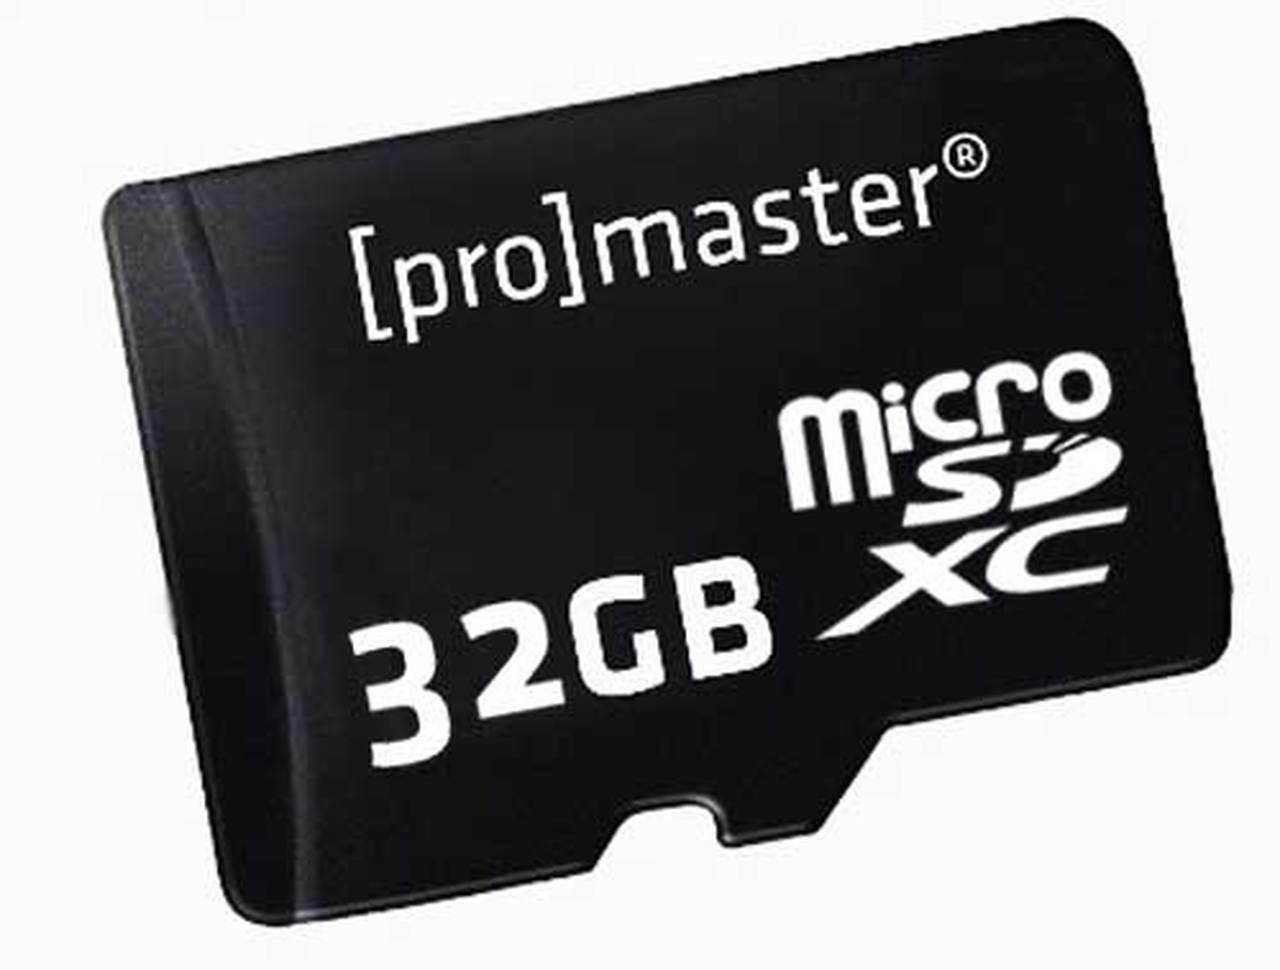 Promaster 1555 32GB 155x Micro SDHC Card